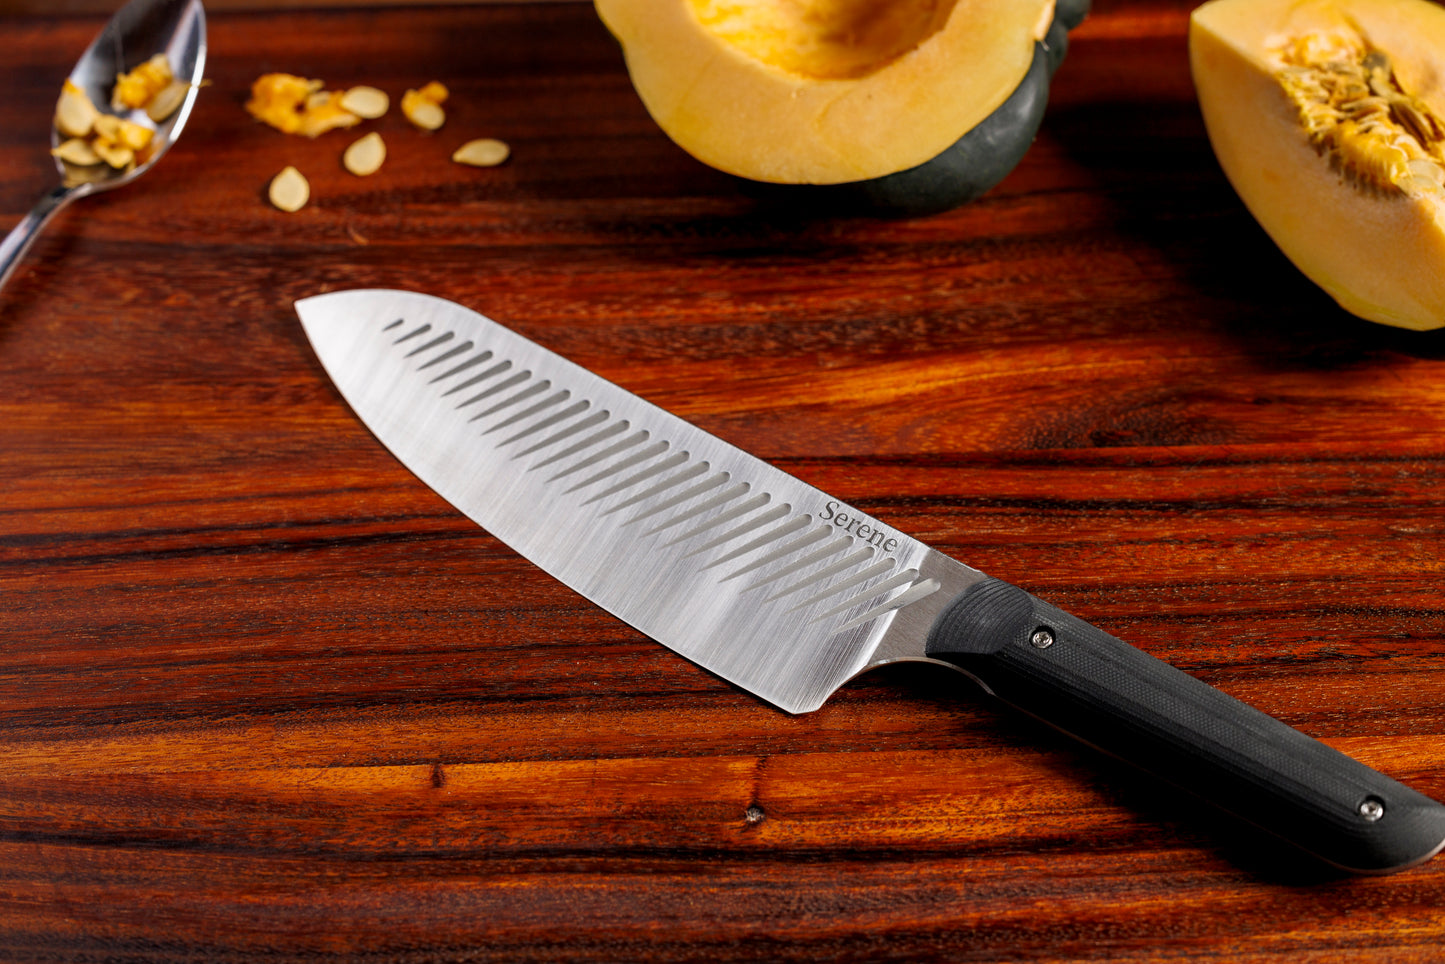 The Fulton Serene Chef Knife